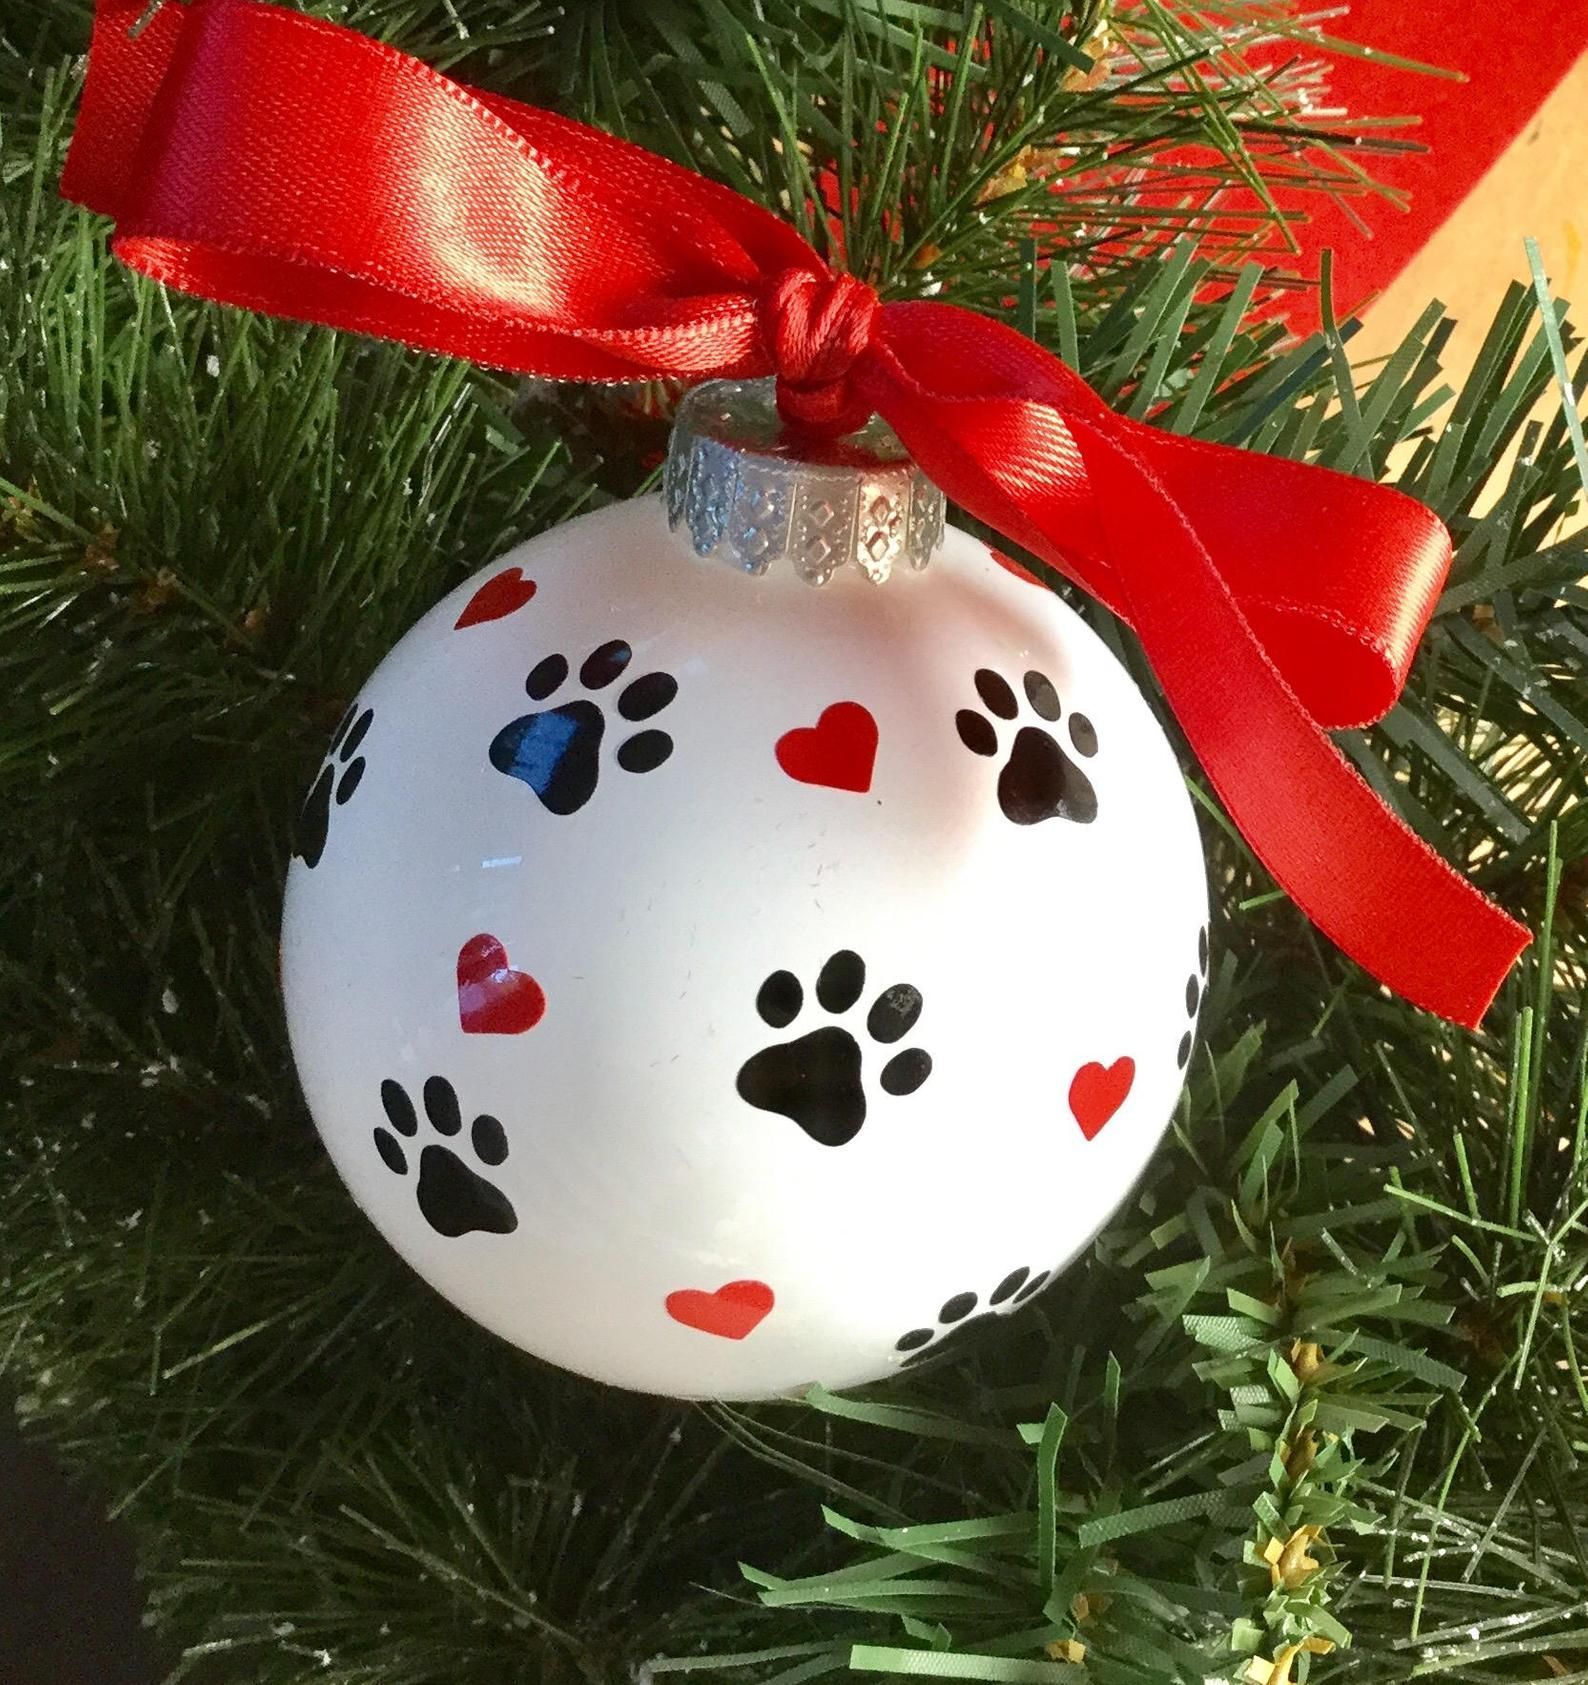 Dog Paw Print and Hearts Christmas Ornament - Personalized Dog Ornament - Dog Paw Print and Hearts Christmas Ornament - Personalized Dog Ornament -   18 diy Christmas ornaments ideas